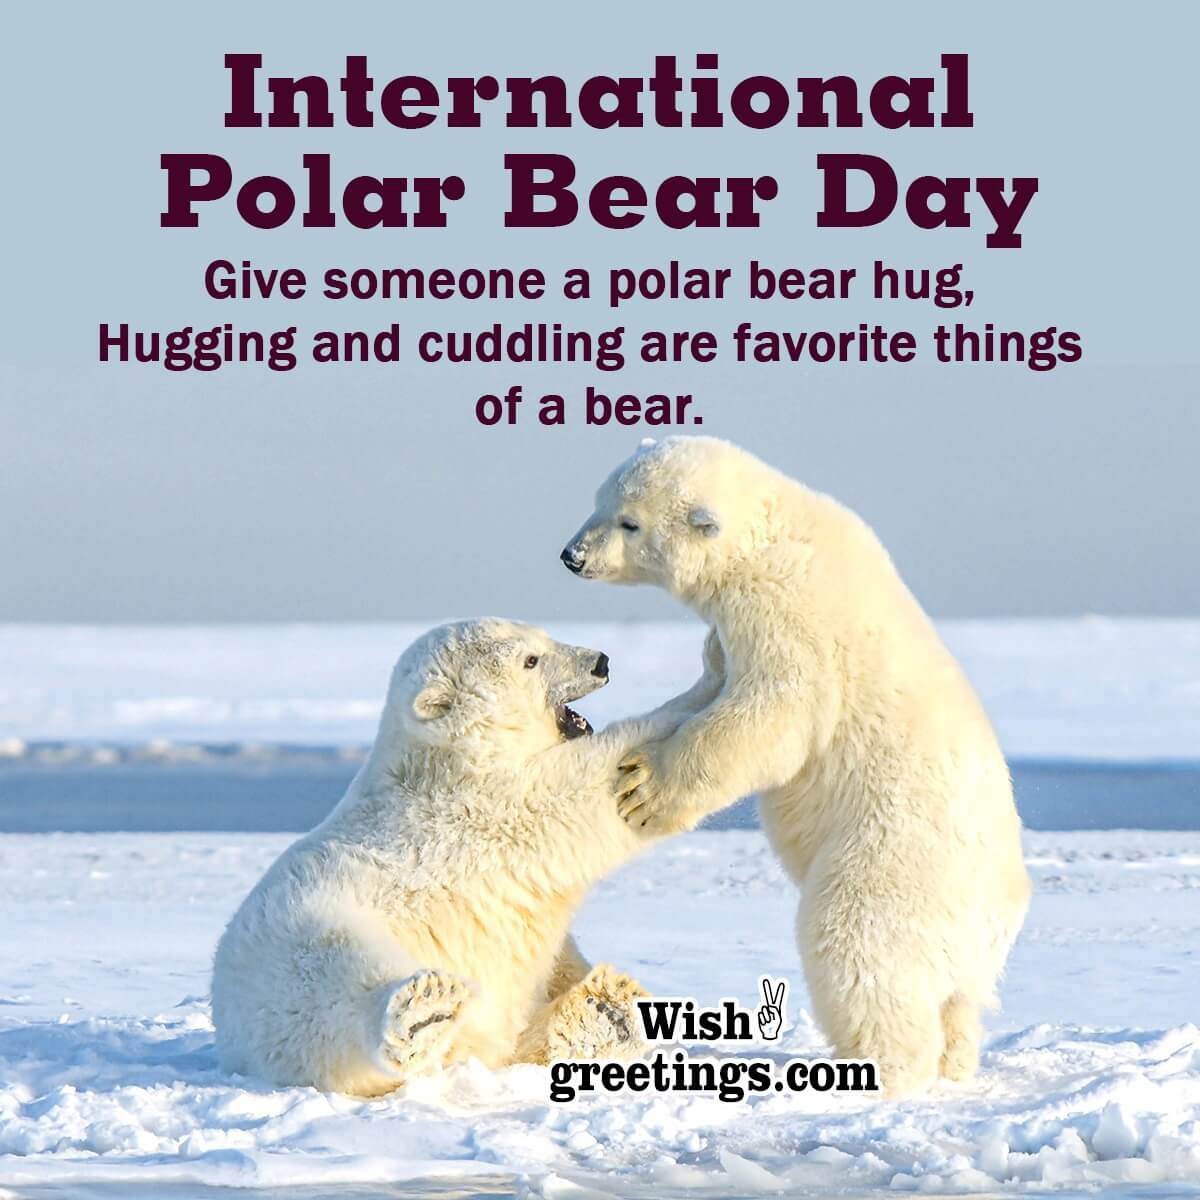 International Polar Bear Day Message